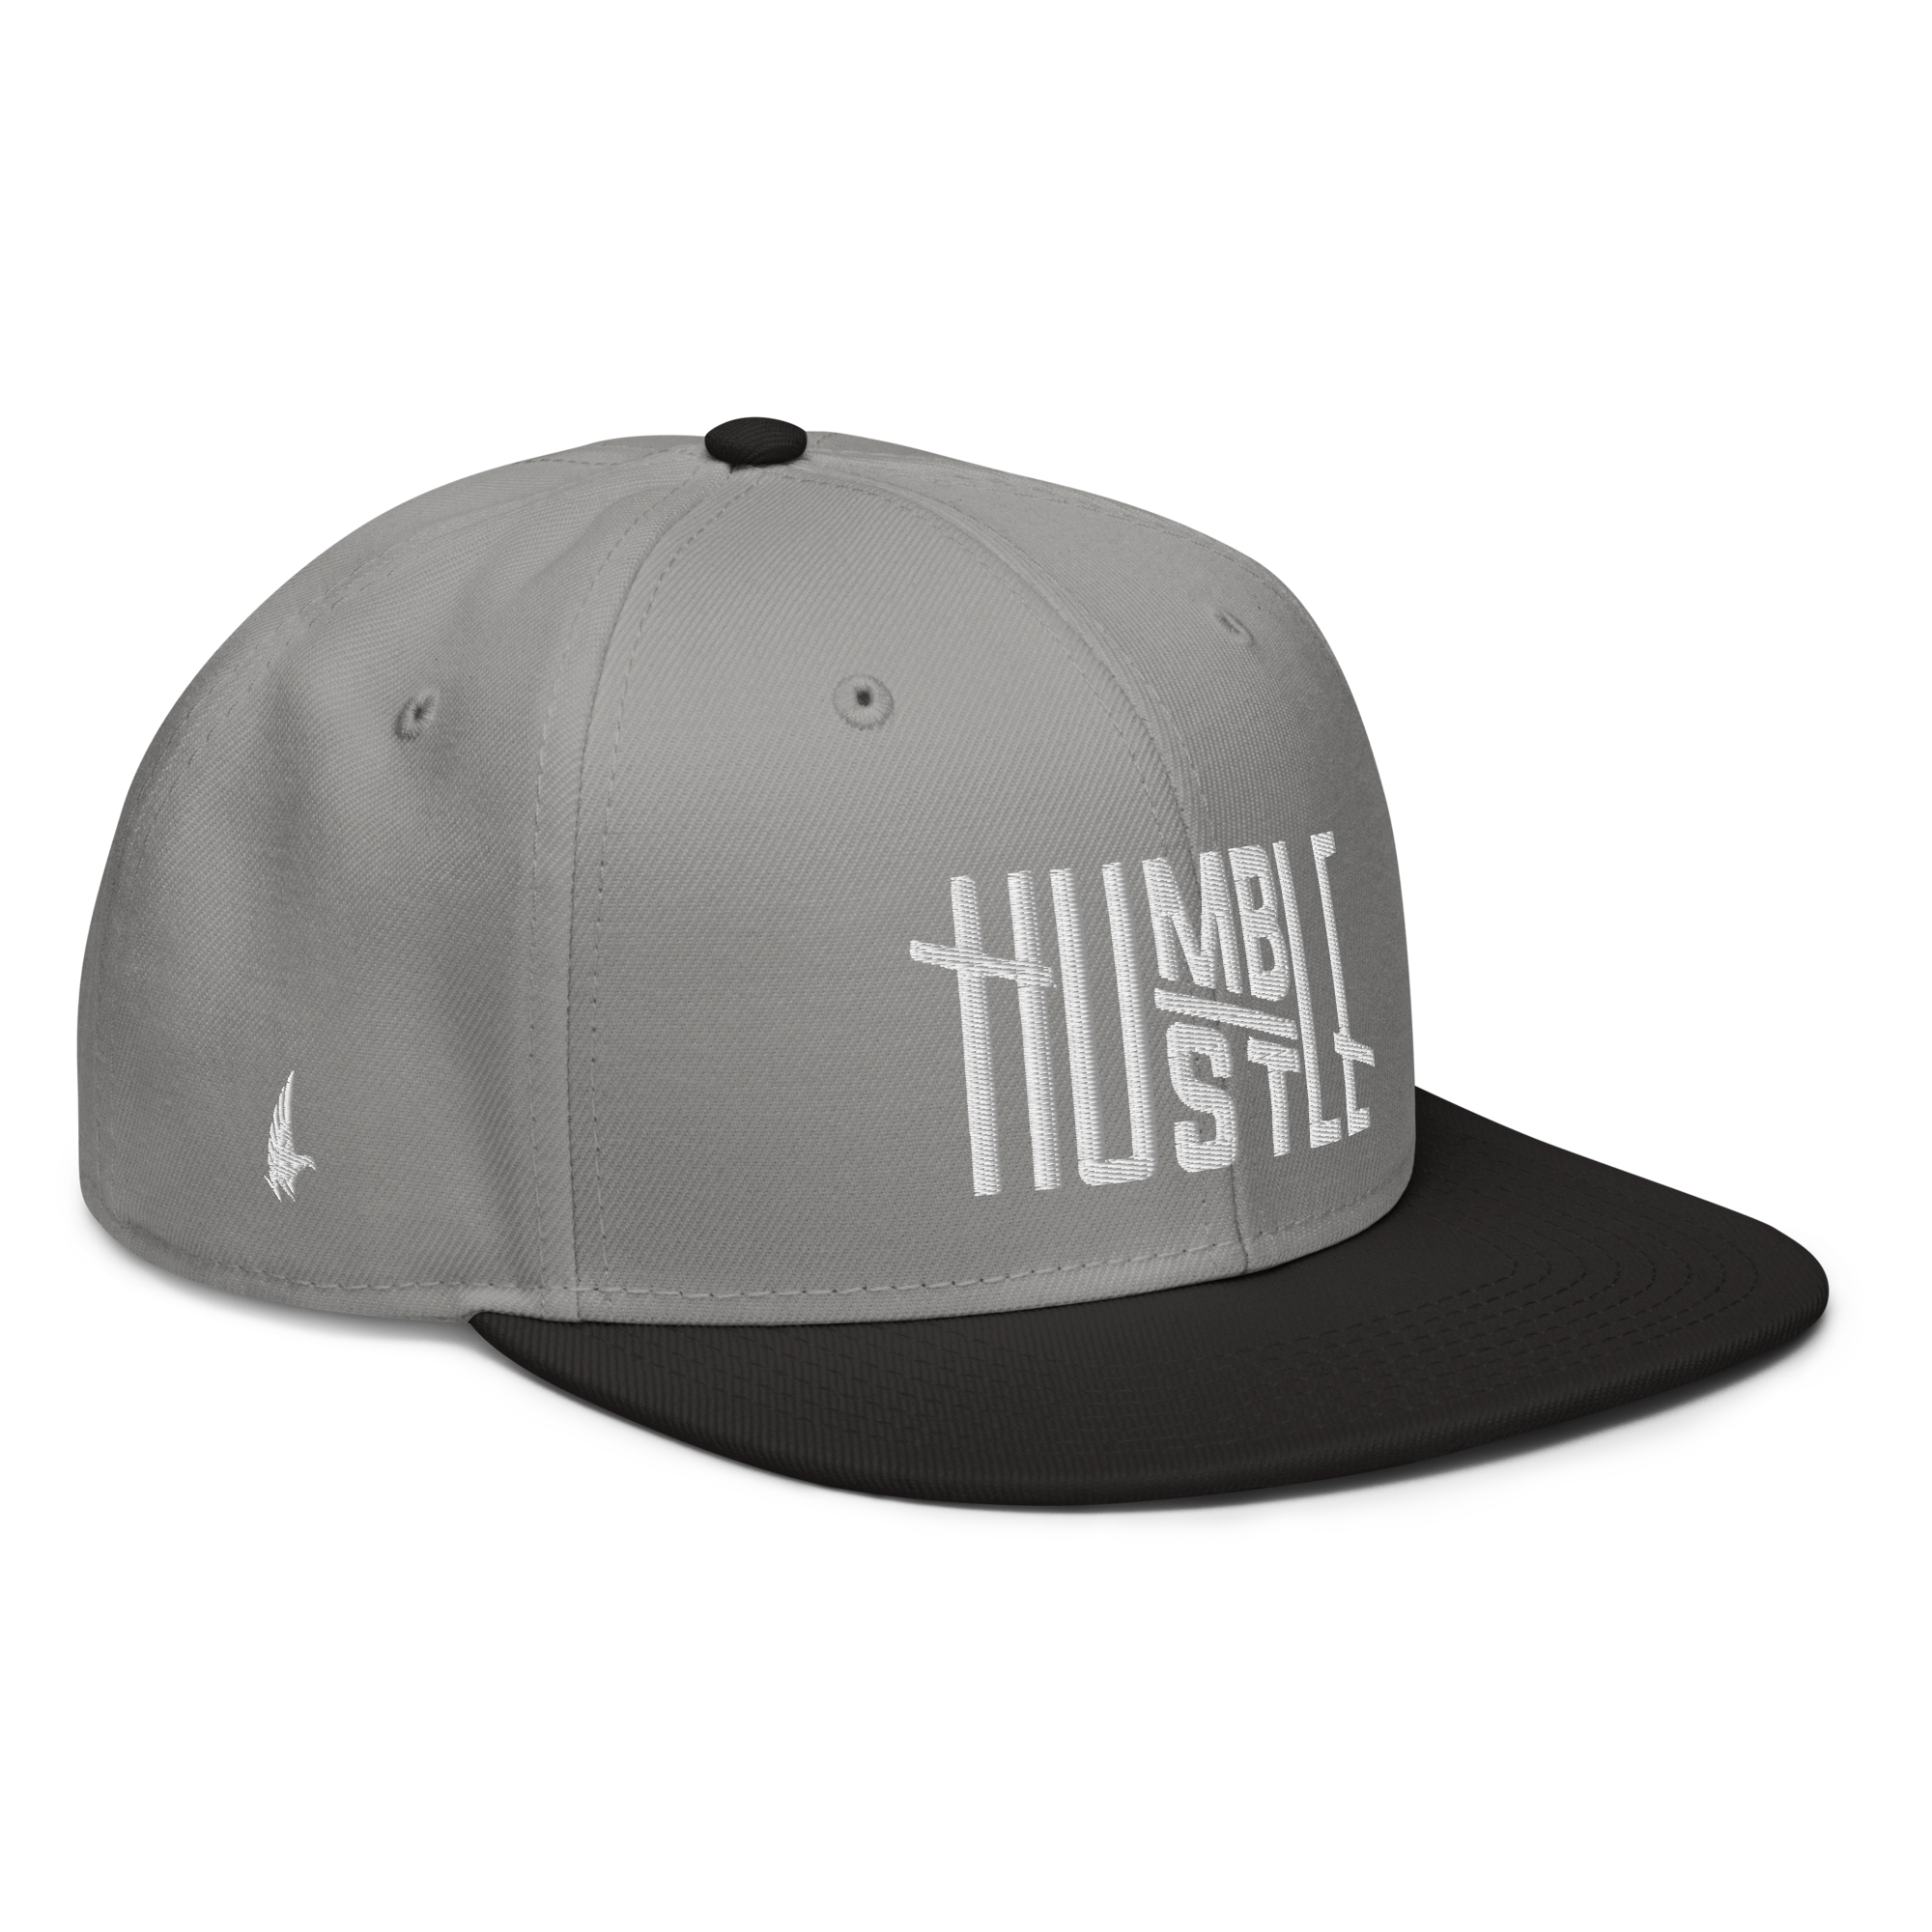 Humble Hustle Snapback Hat - Gray/White/Black OS - Loyalty Vibes